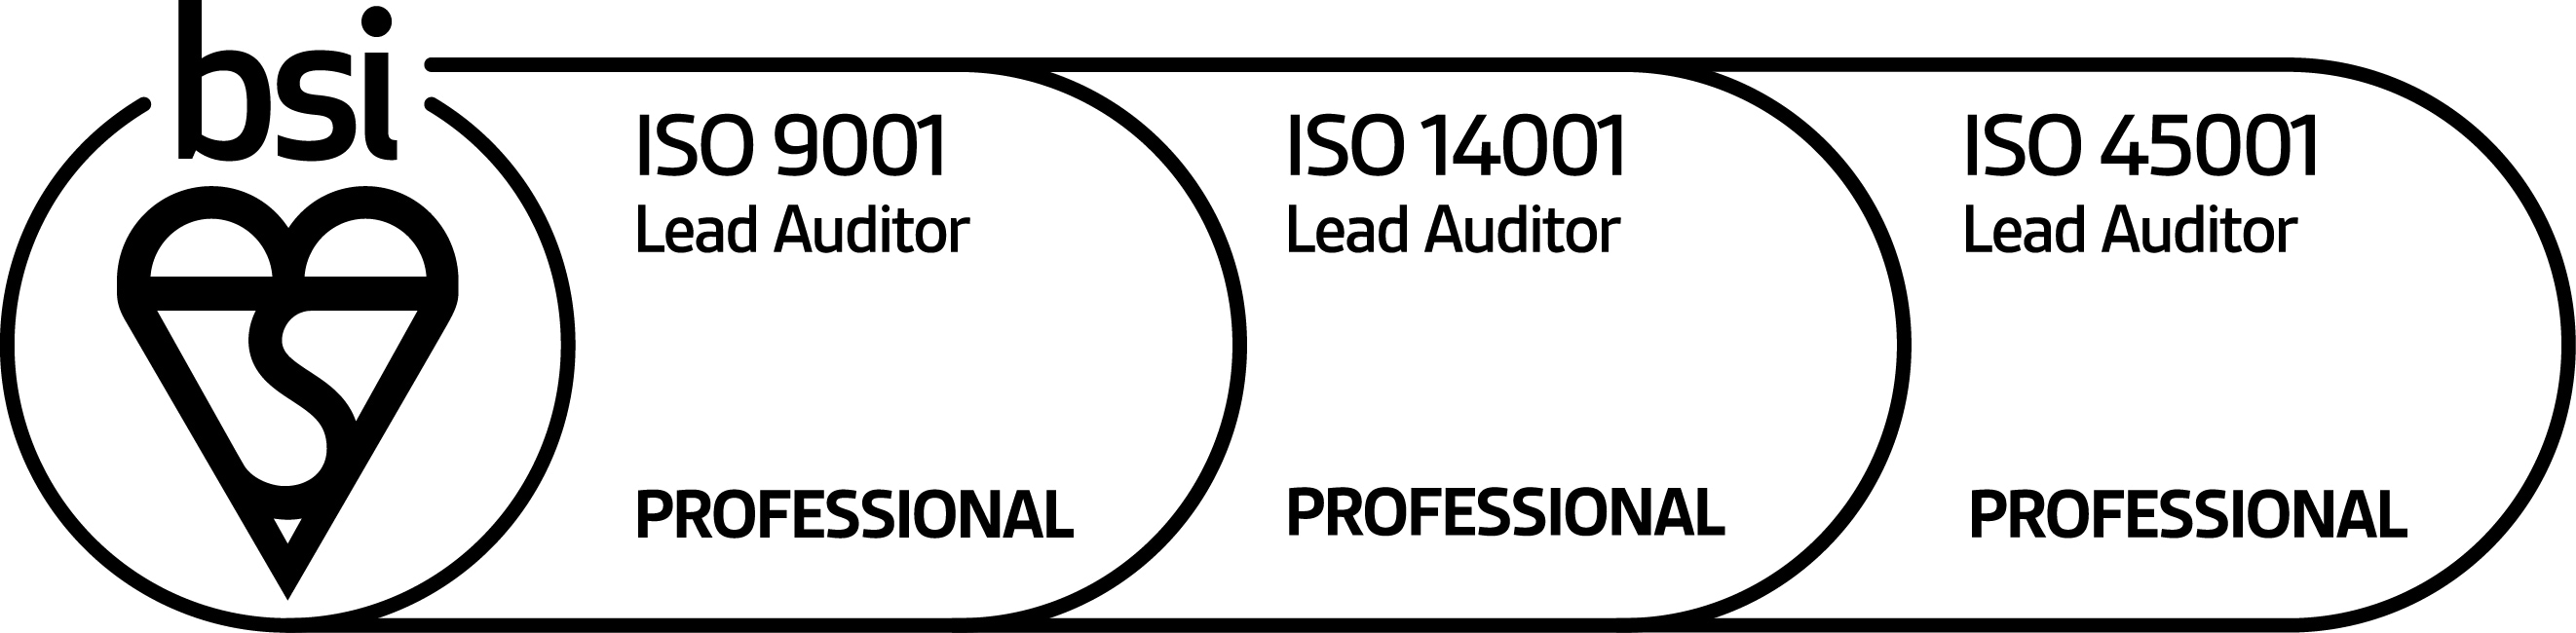 ISO-9001-Internal-Auditor-Professional-mark-of-trust-logo-En-GB-0820.png